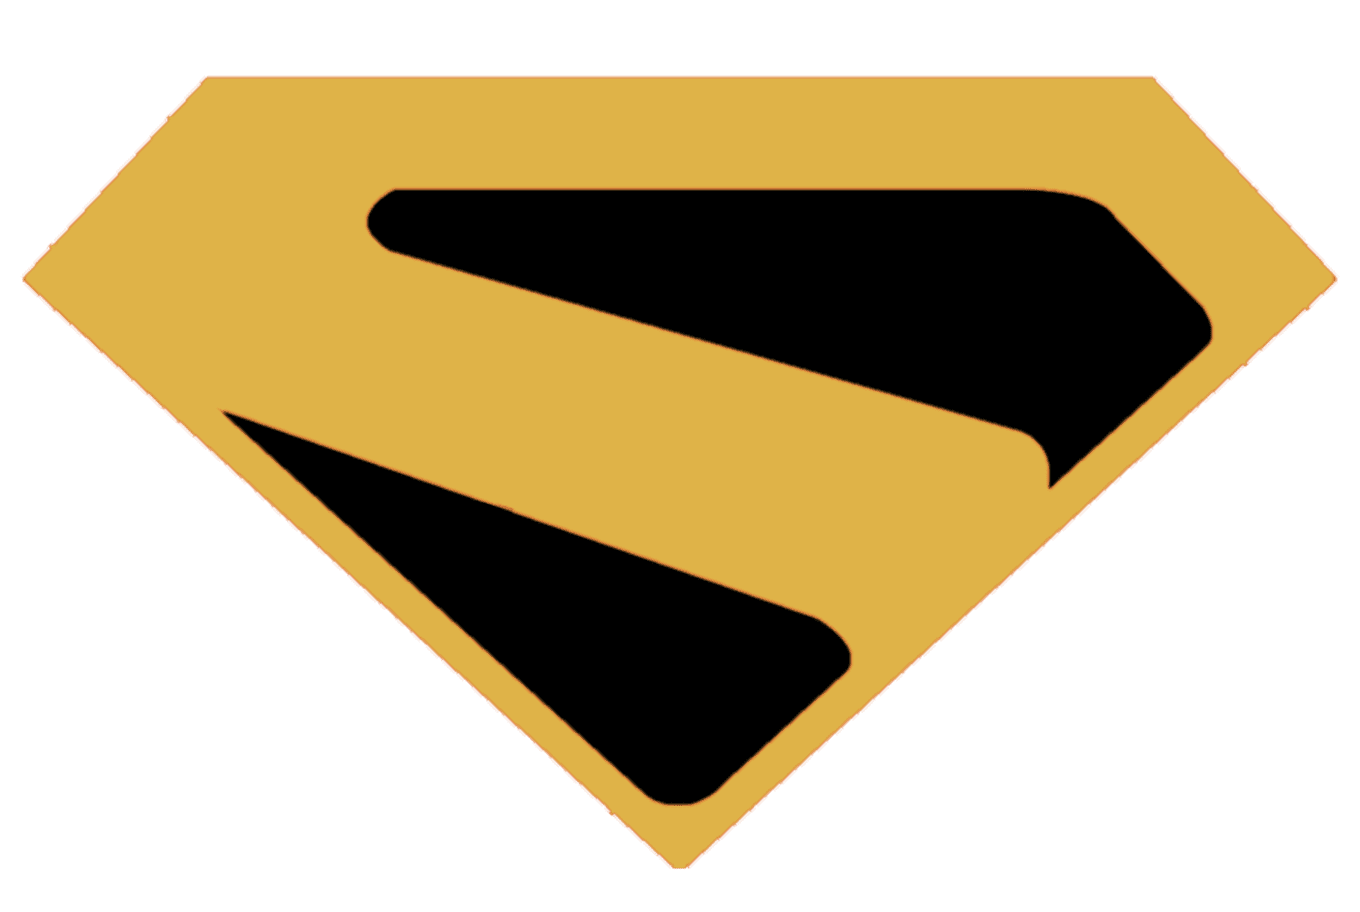 Warworld-Superman-logo-Kingdom-Come-gold-yellow